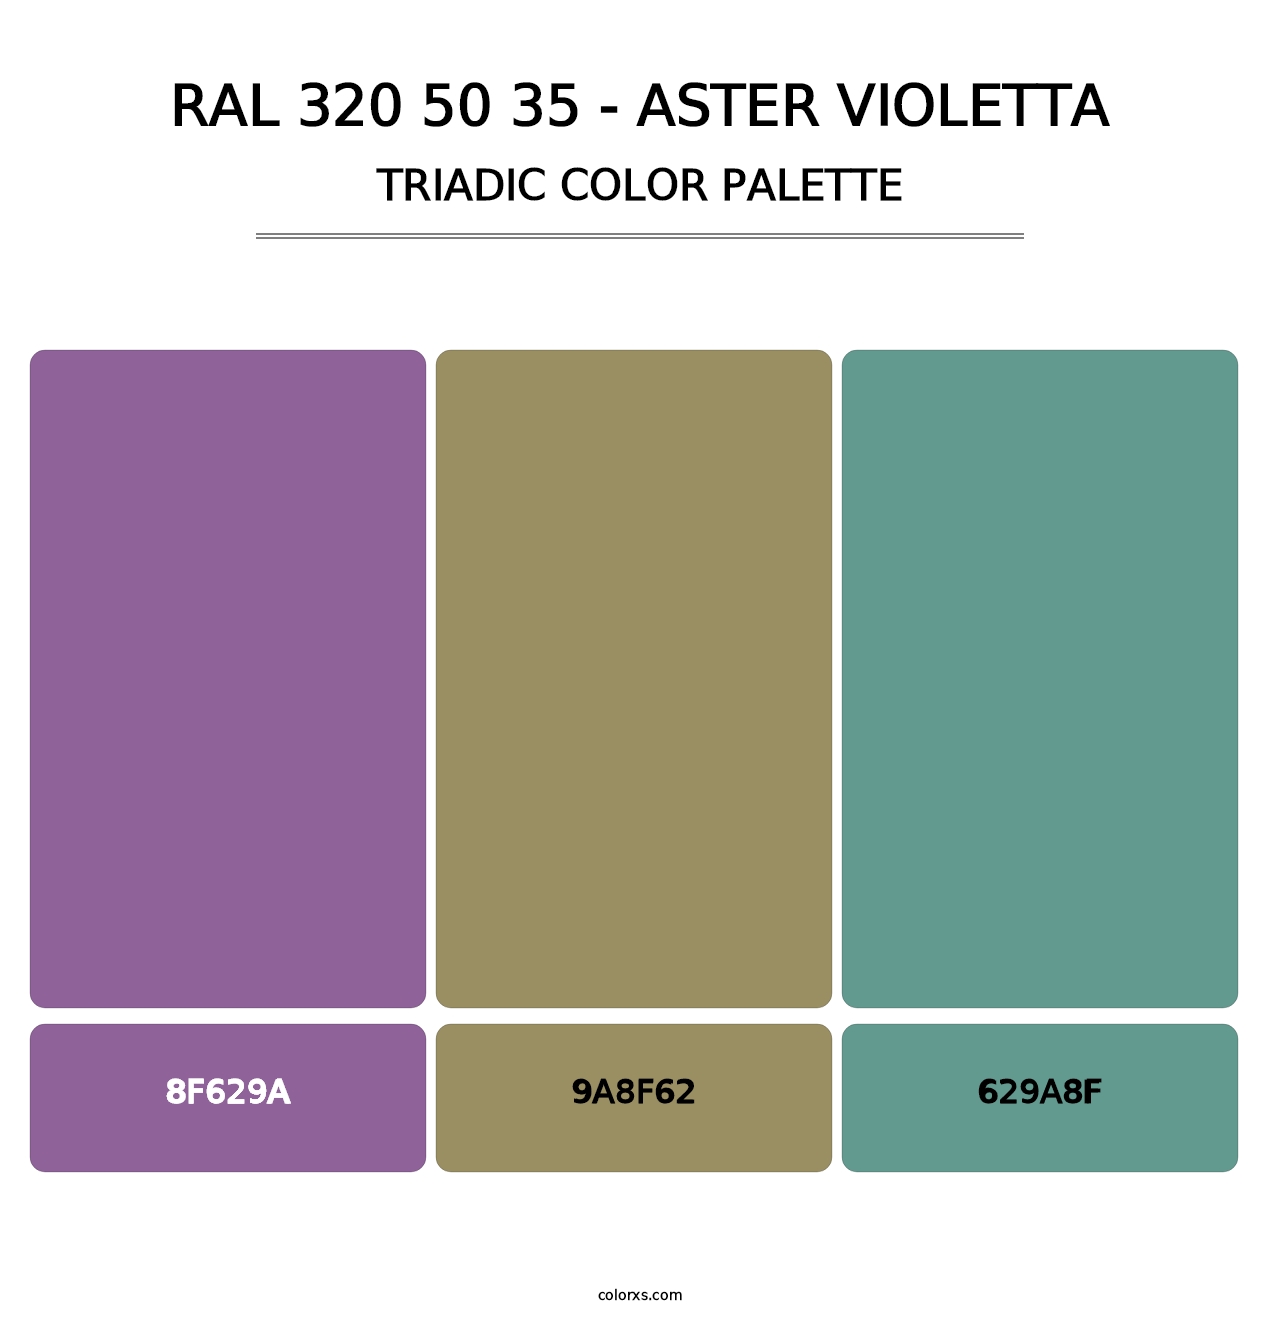 RAL 320 50 35 - Aster Violetta - Triadic Color Palette